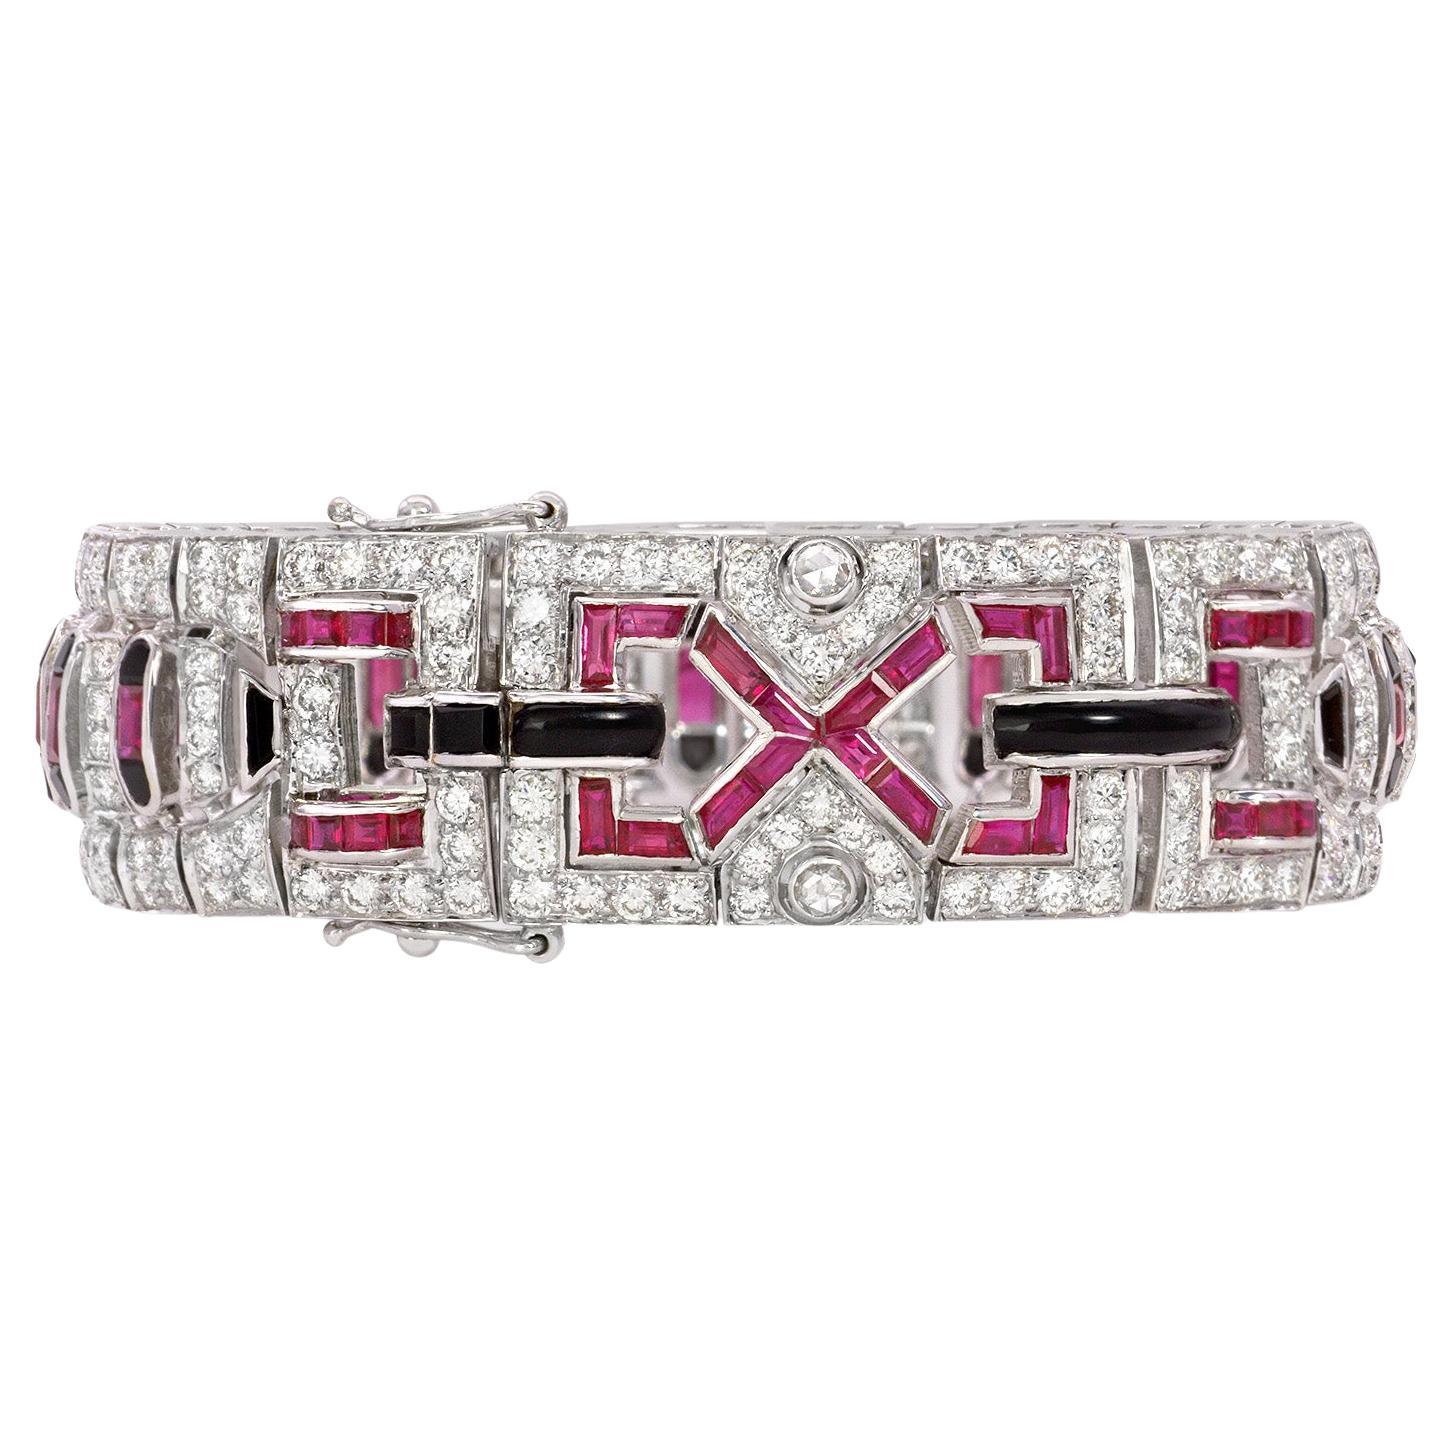 6.9 Carat Diamond and Ruby Art Deco Bracelet